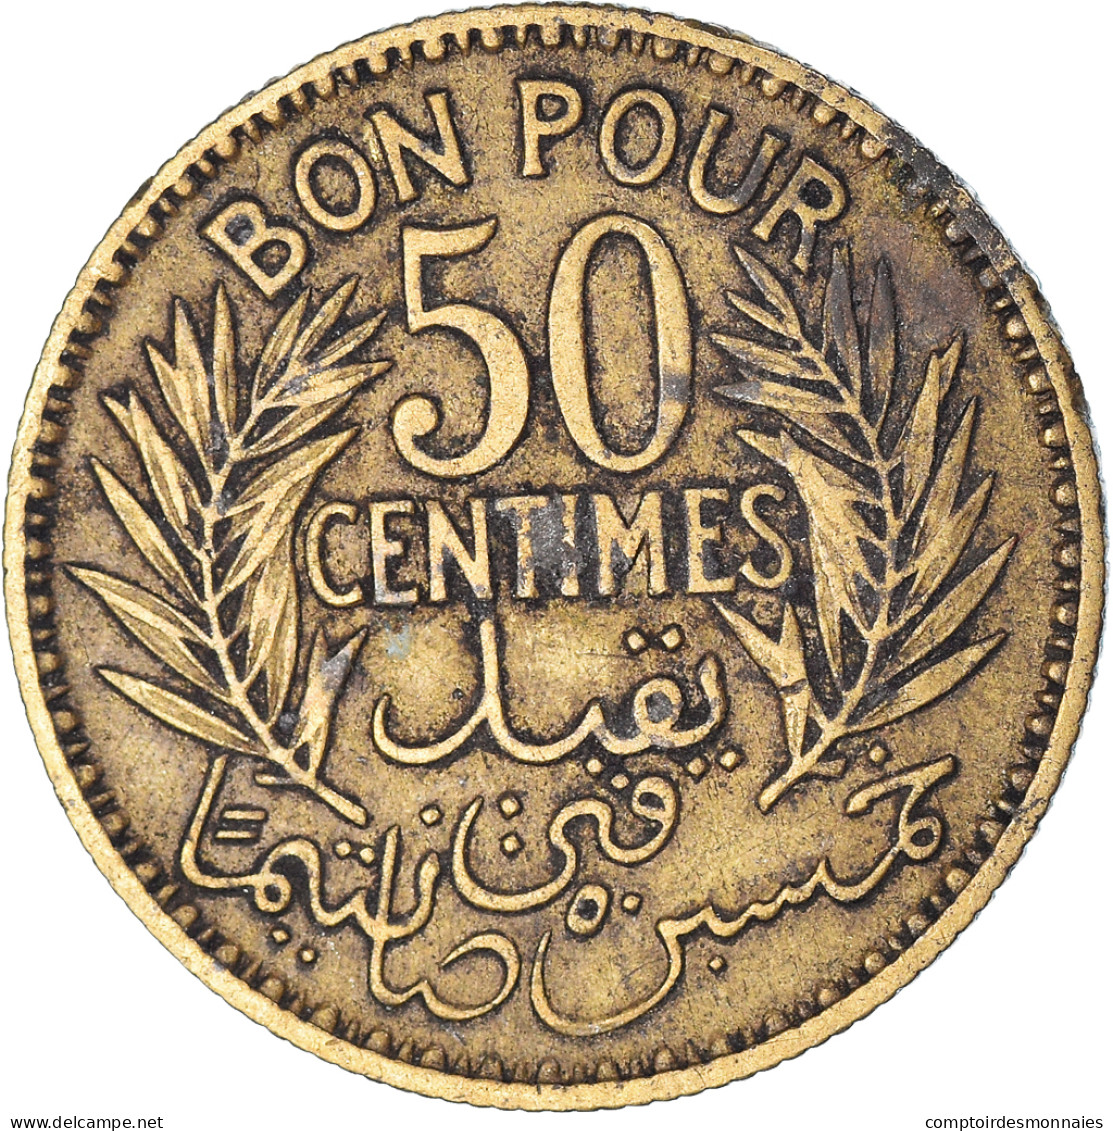 Monnaie, Tunisie, 50 Centimes, 1921 - Tunisia